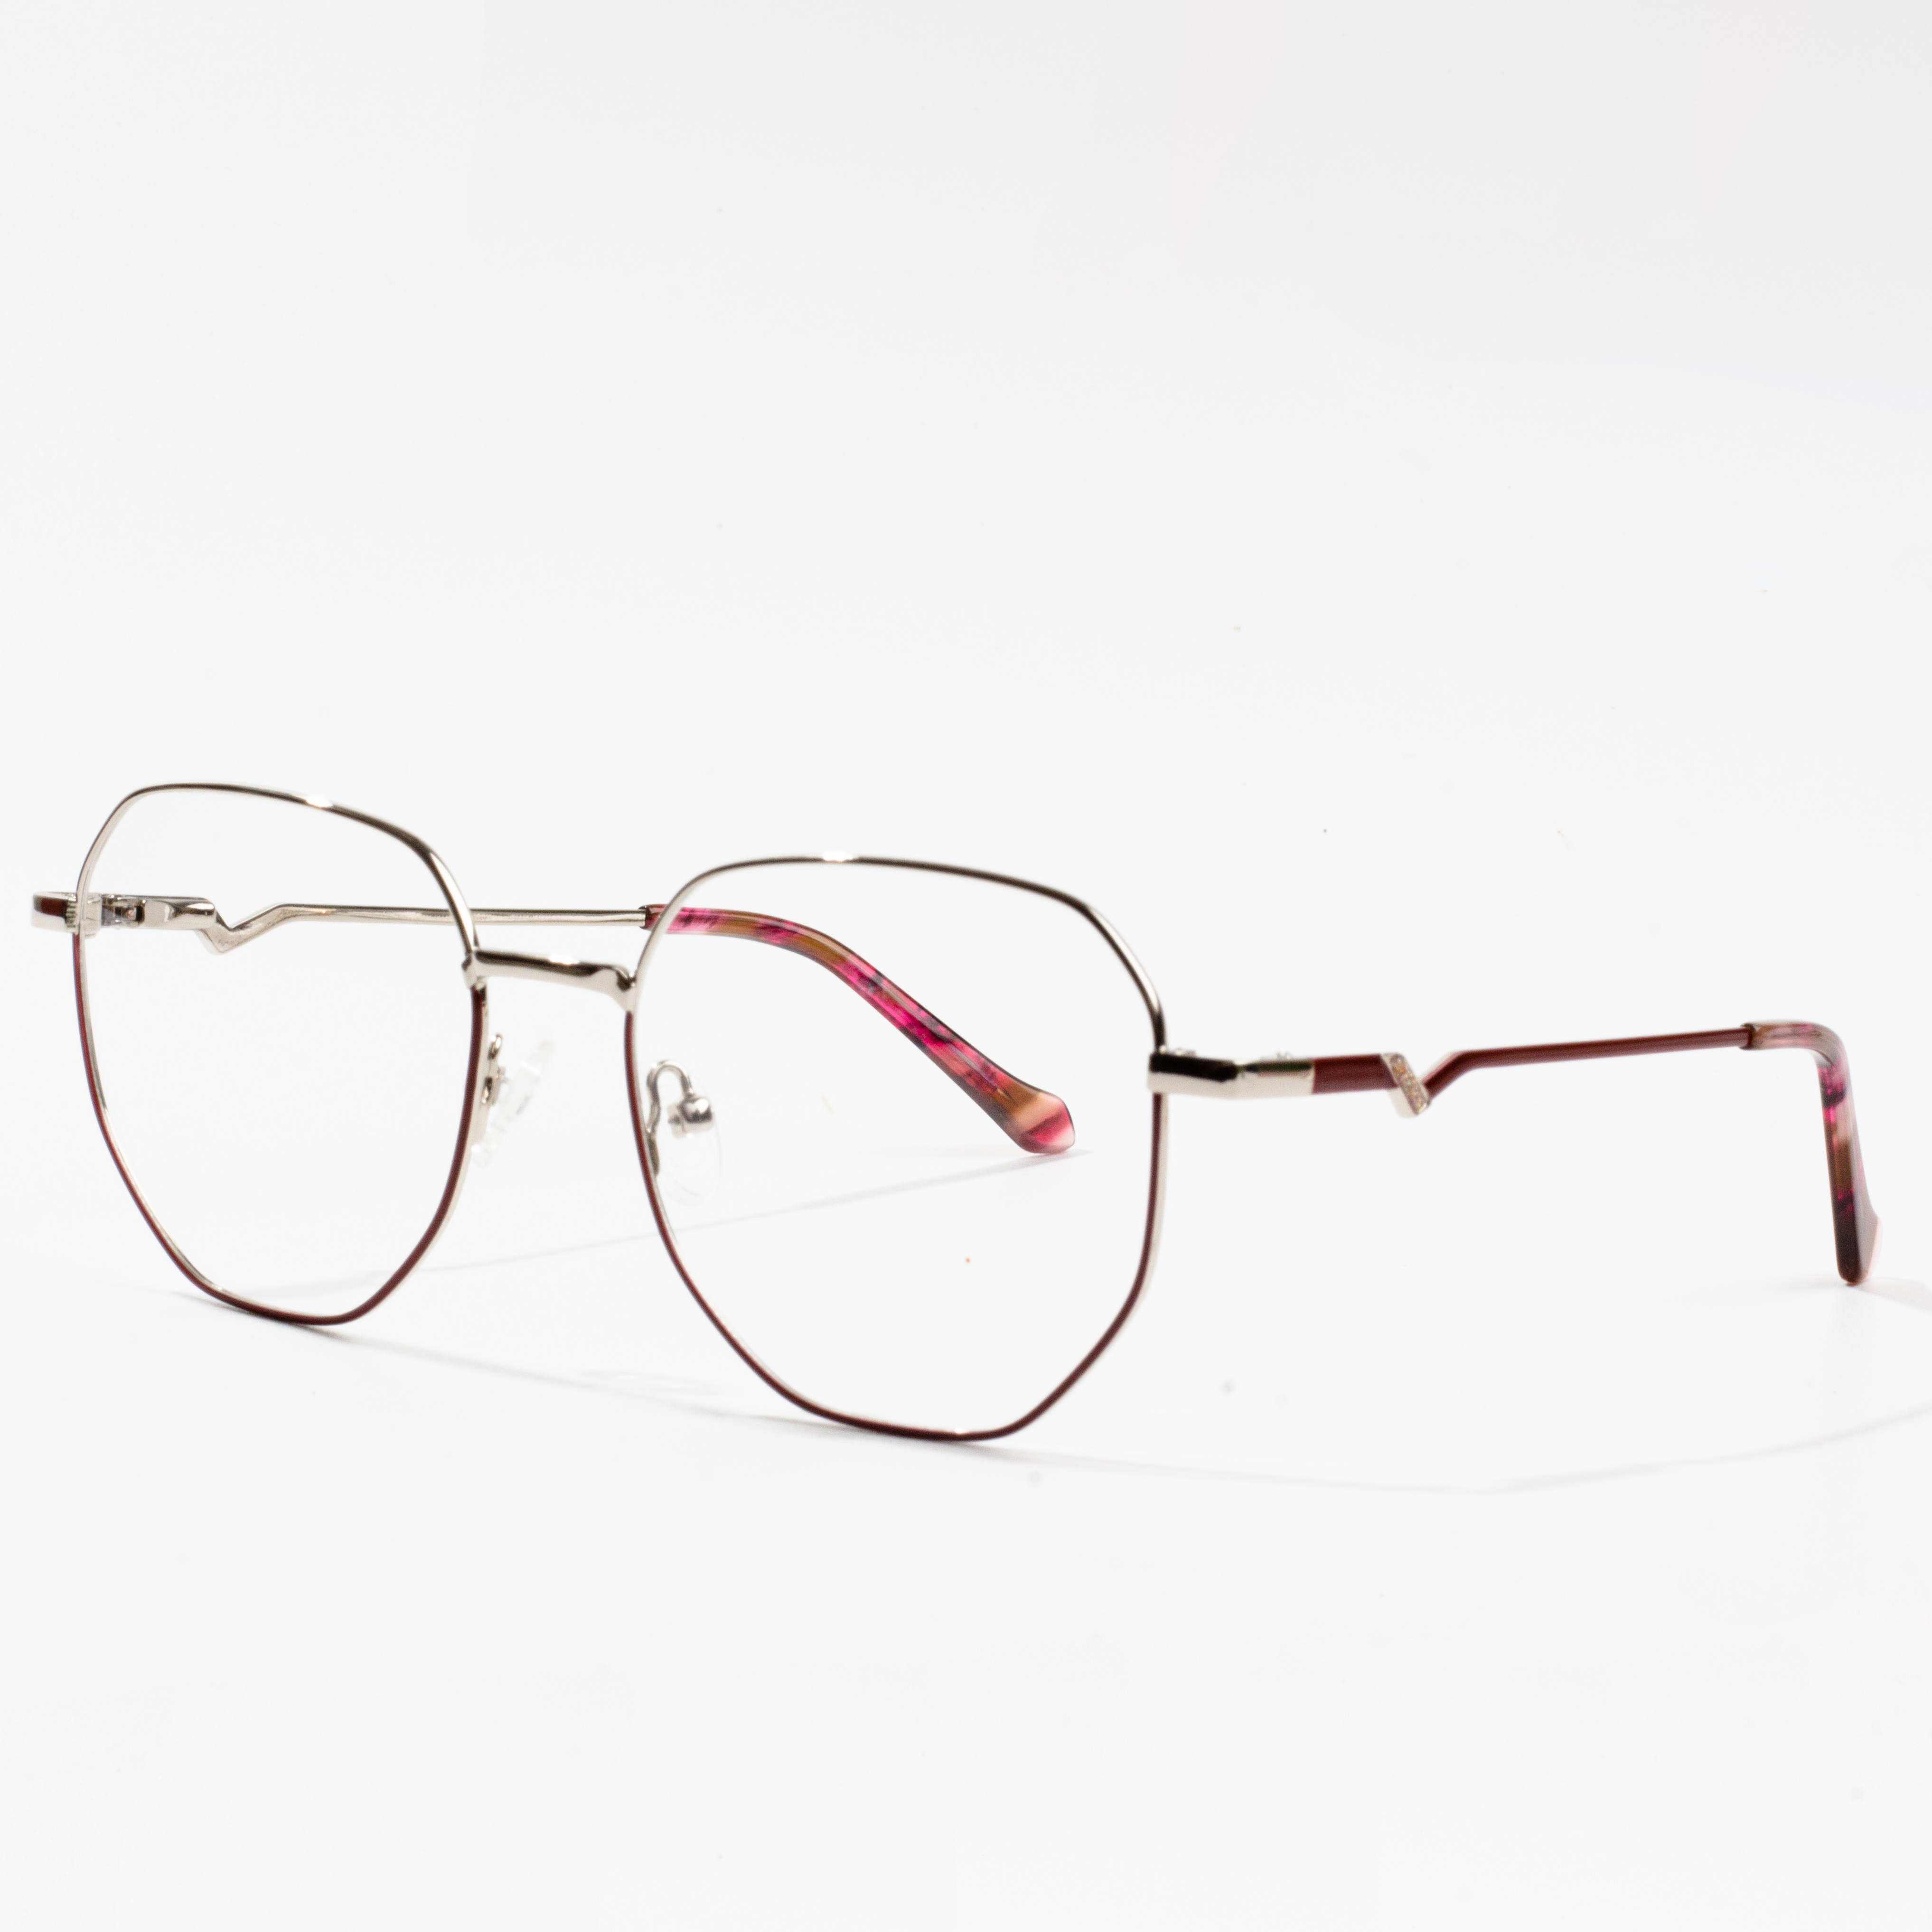 petite eyeglass frames